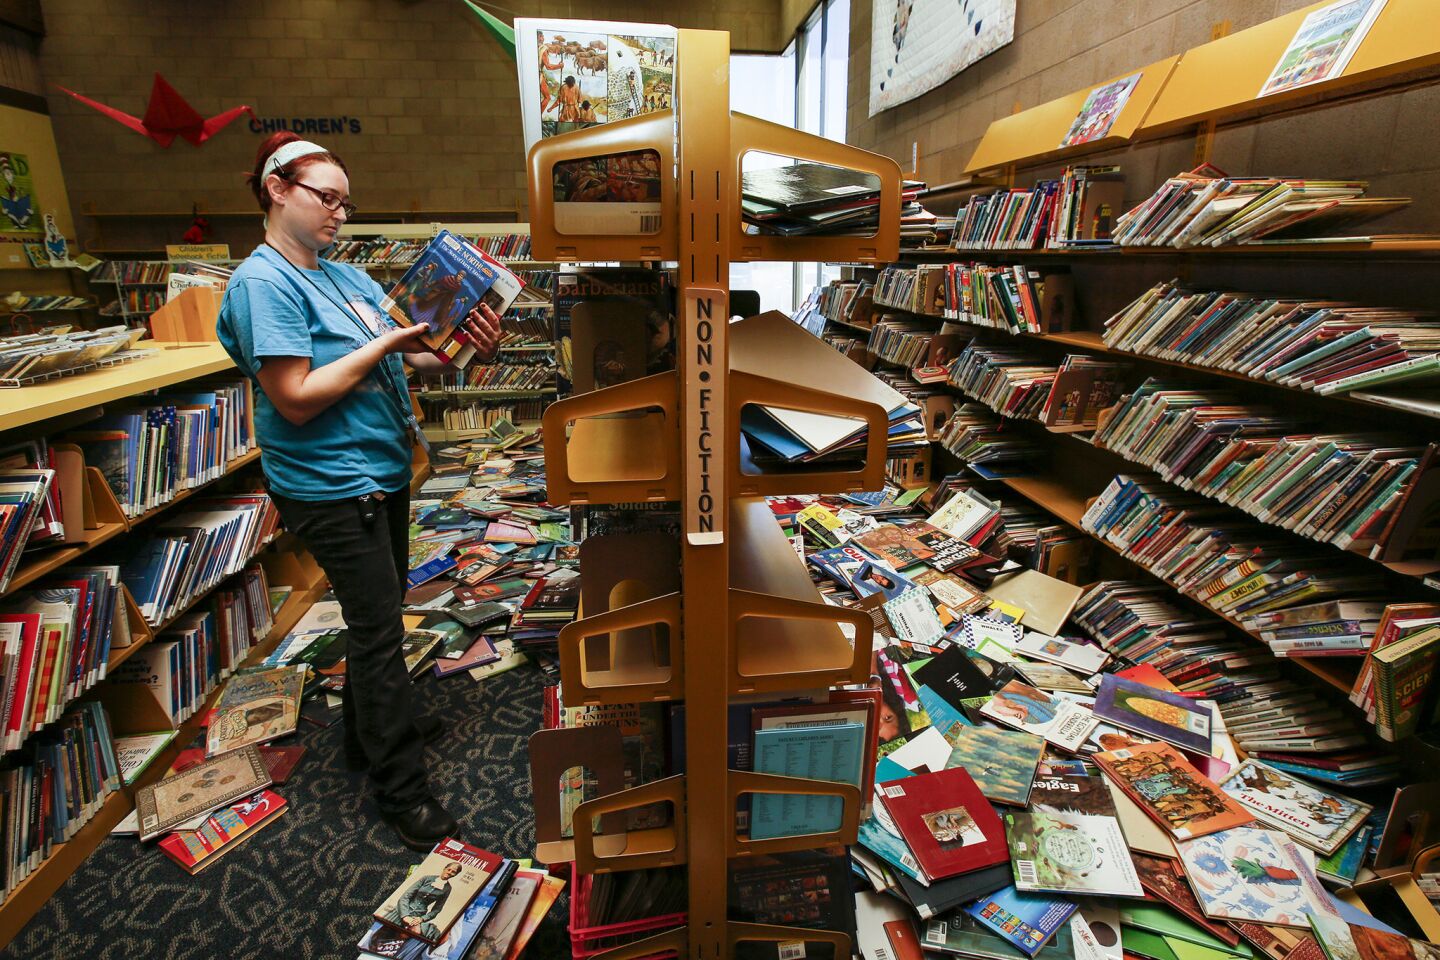 Shalyn Pineda, regional supervisor of Kern County's libraries, picks up books at Ridgecrest Library after Thursday's 6.4 earthquake dislodged bookshelves.